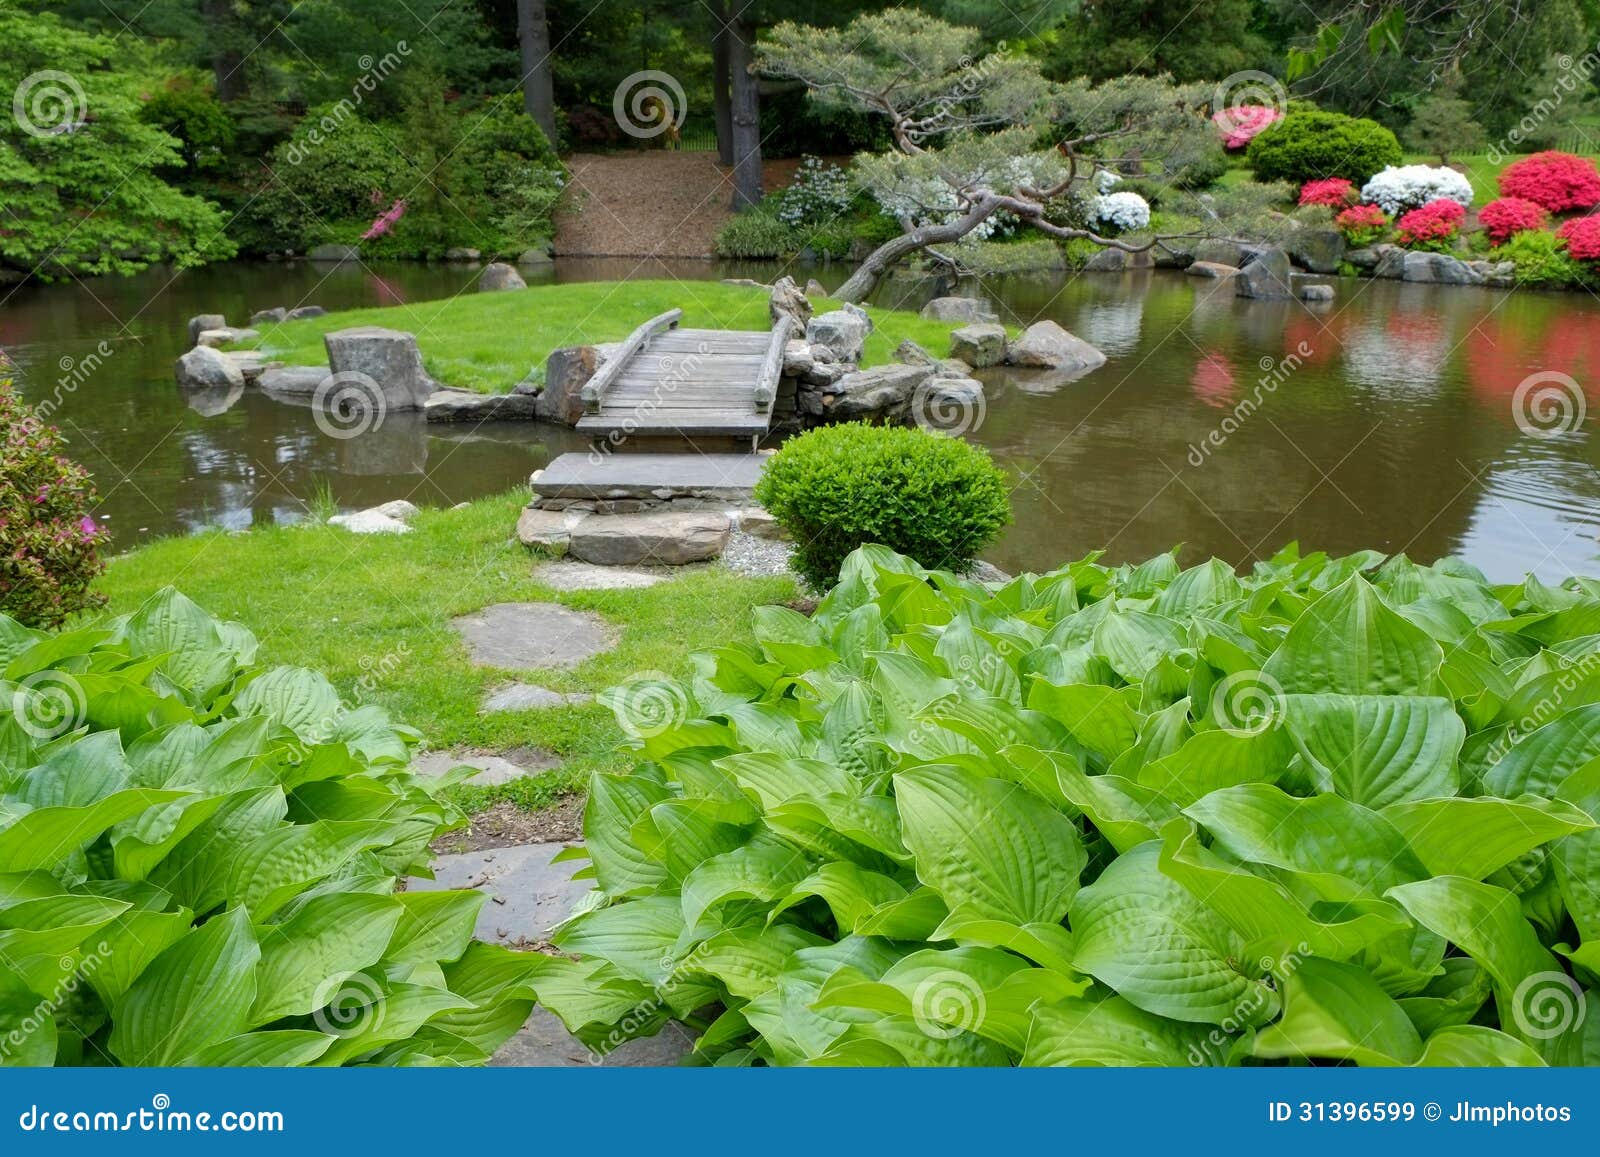 wooden foot bridge old japanese gardens over koi pond 31396599